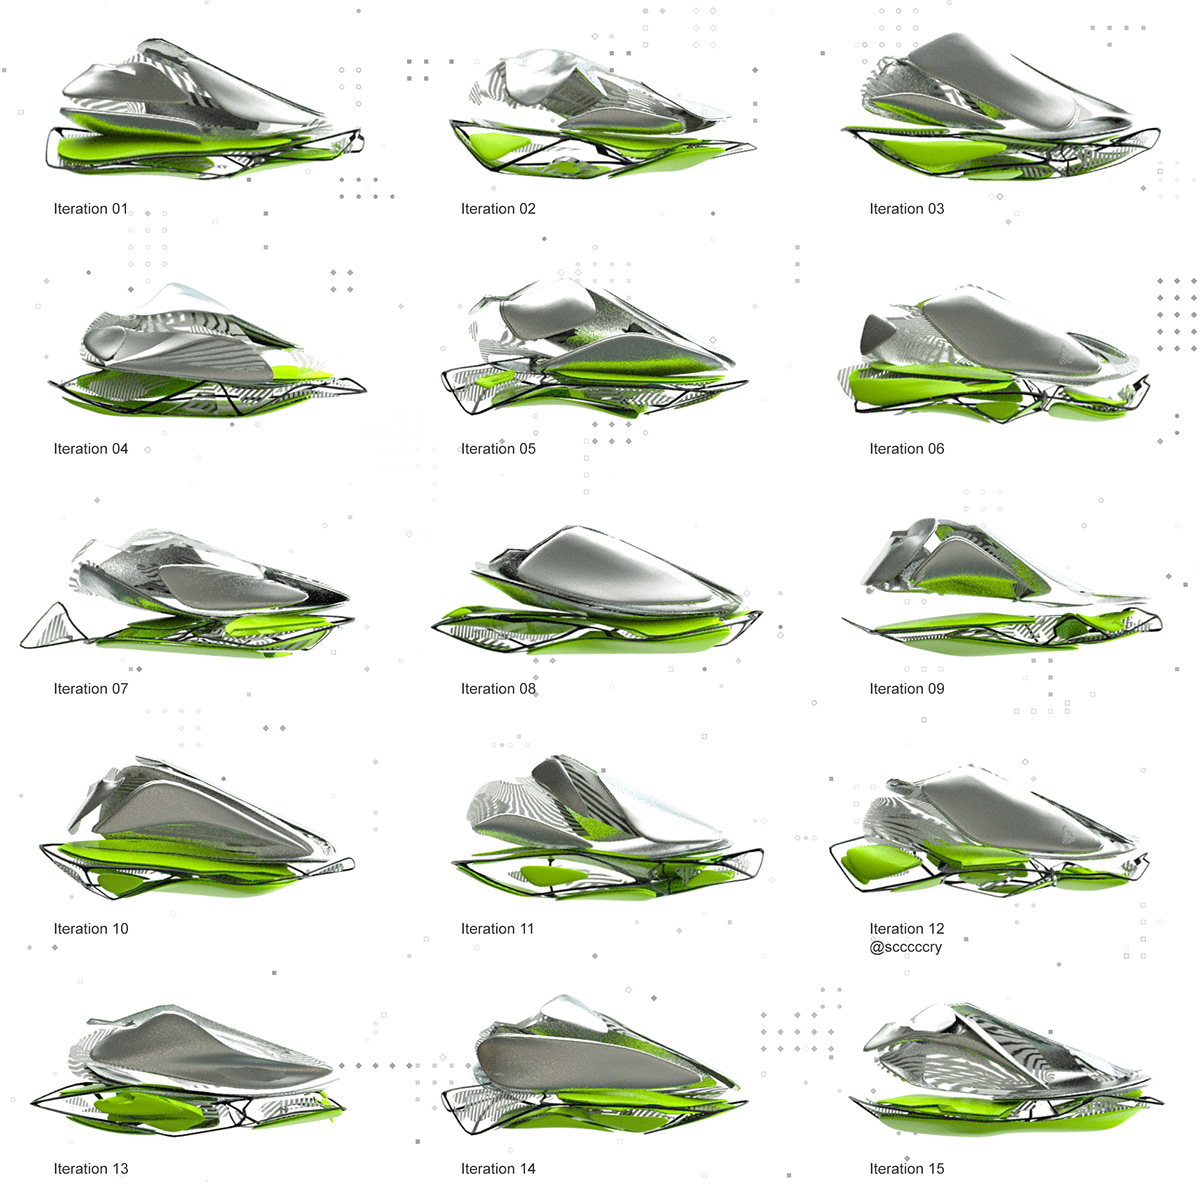 footwear design footwear sneaker Nike adidas product design  kicks